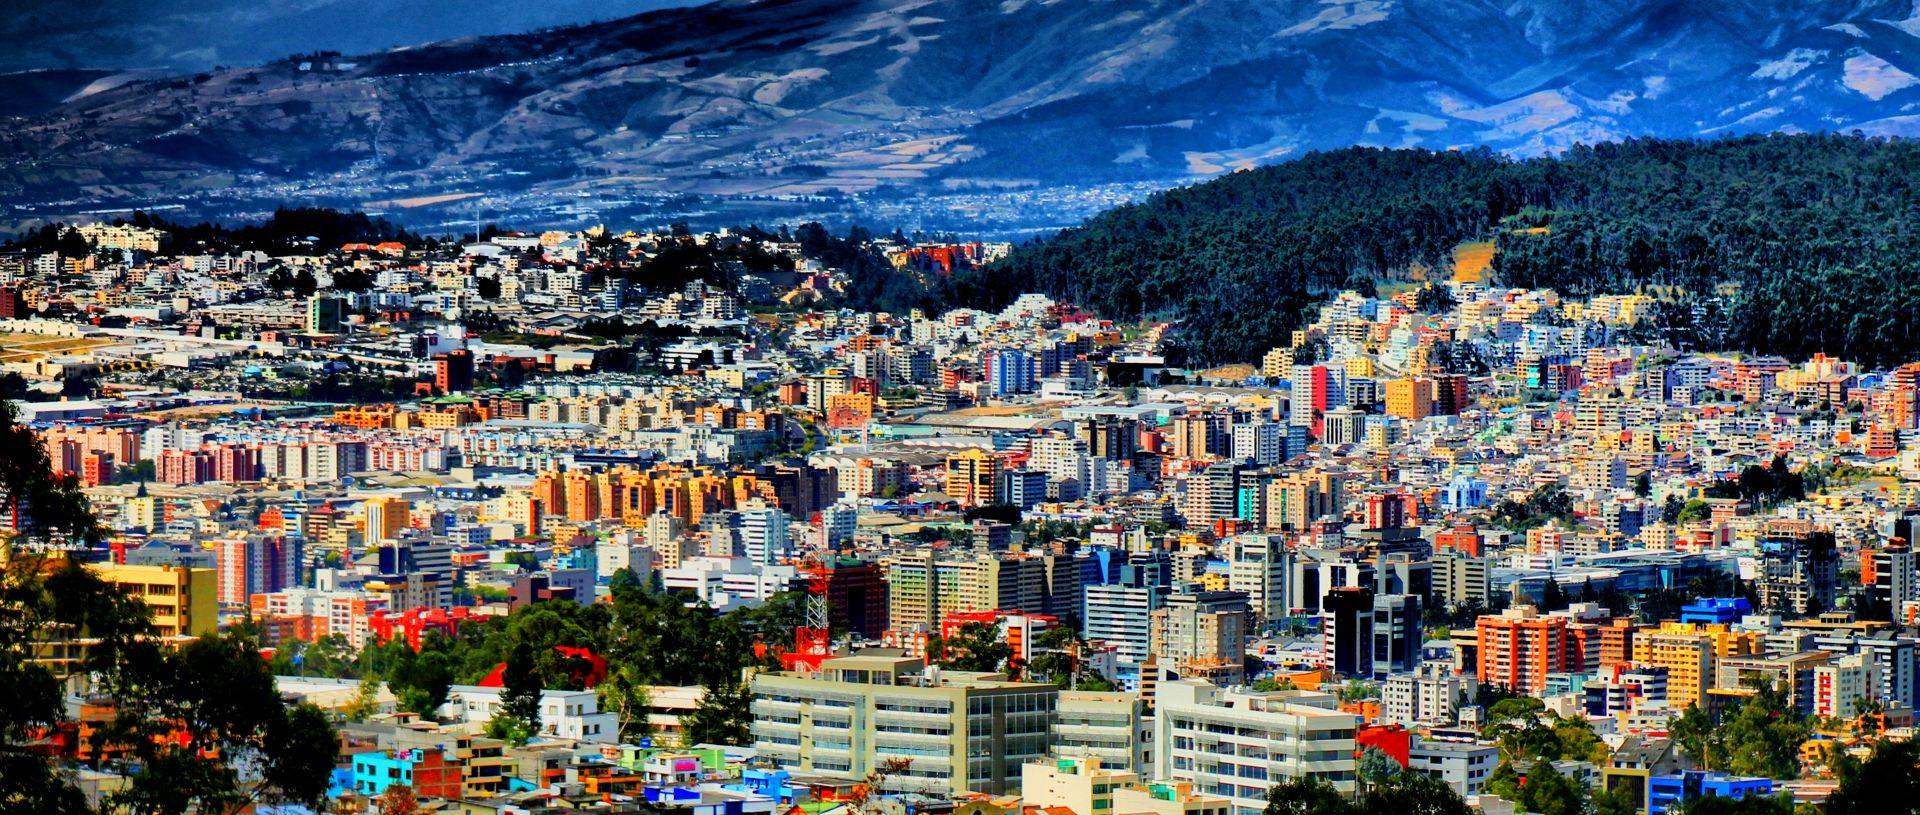 Colourful Quito panoramic.jpg